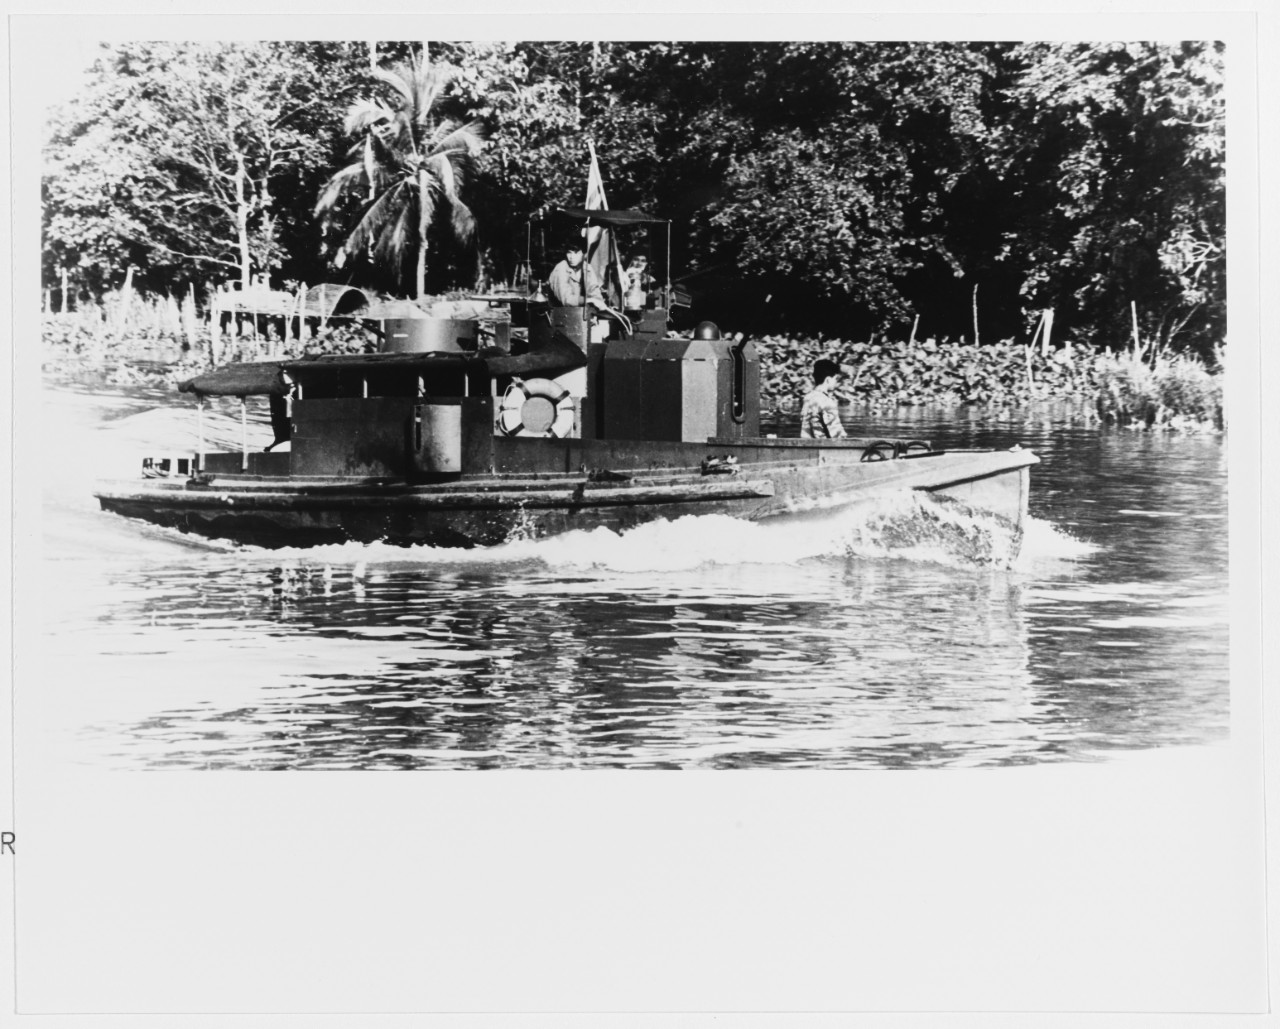 South Vietnamese "STCAN" (or "FOM") river patrol boat